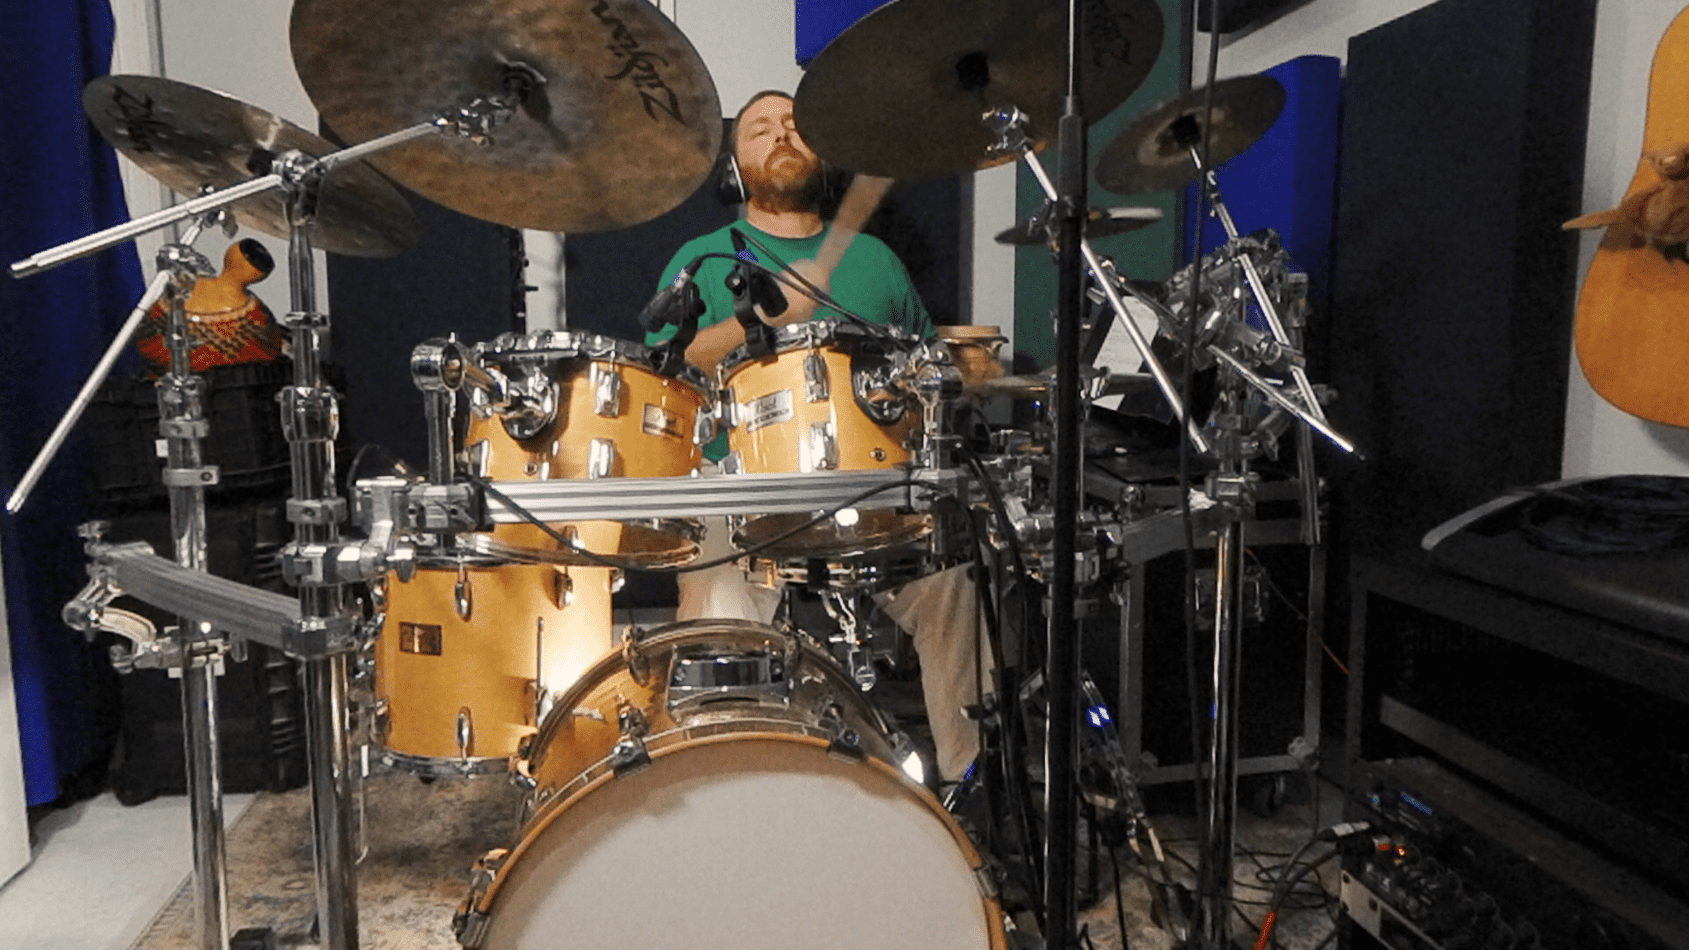 shuffle drum beats on drum set